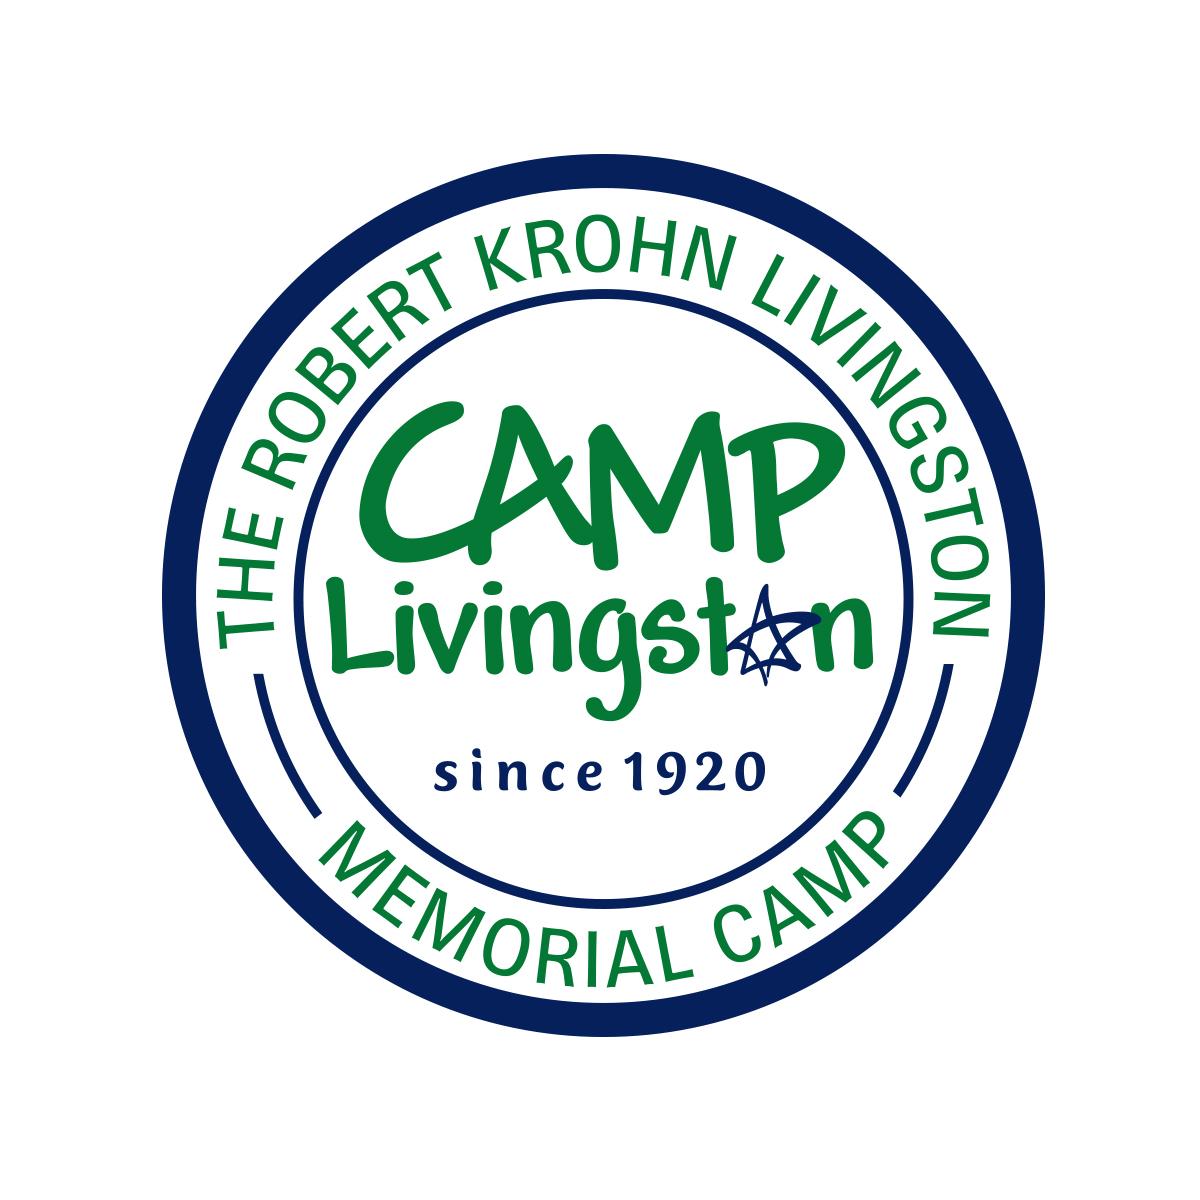 Camp Livingston Logo Blue Circle 2019.jpg